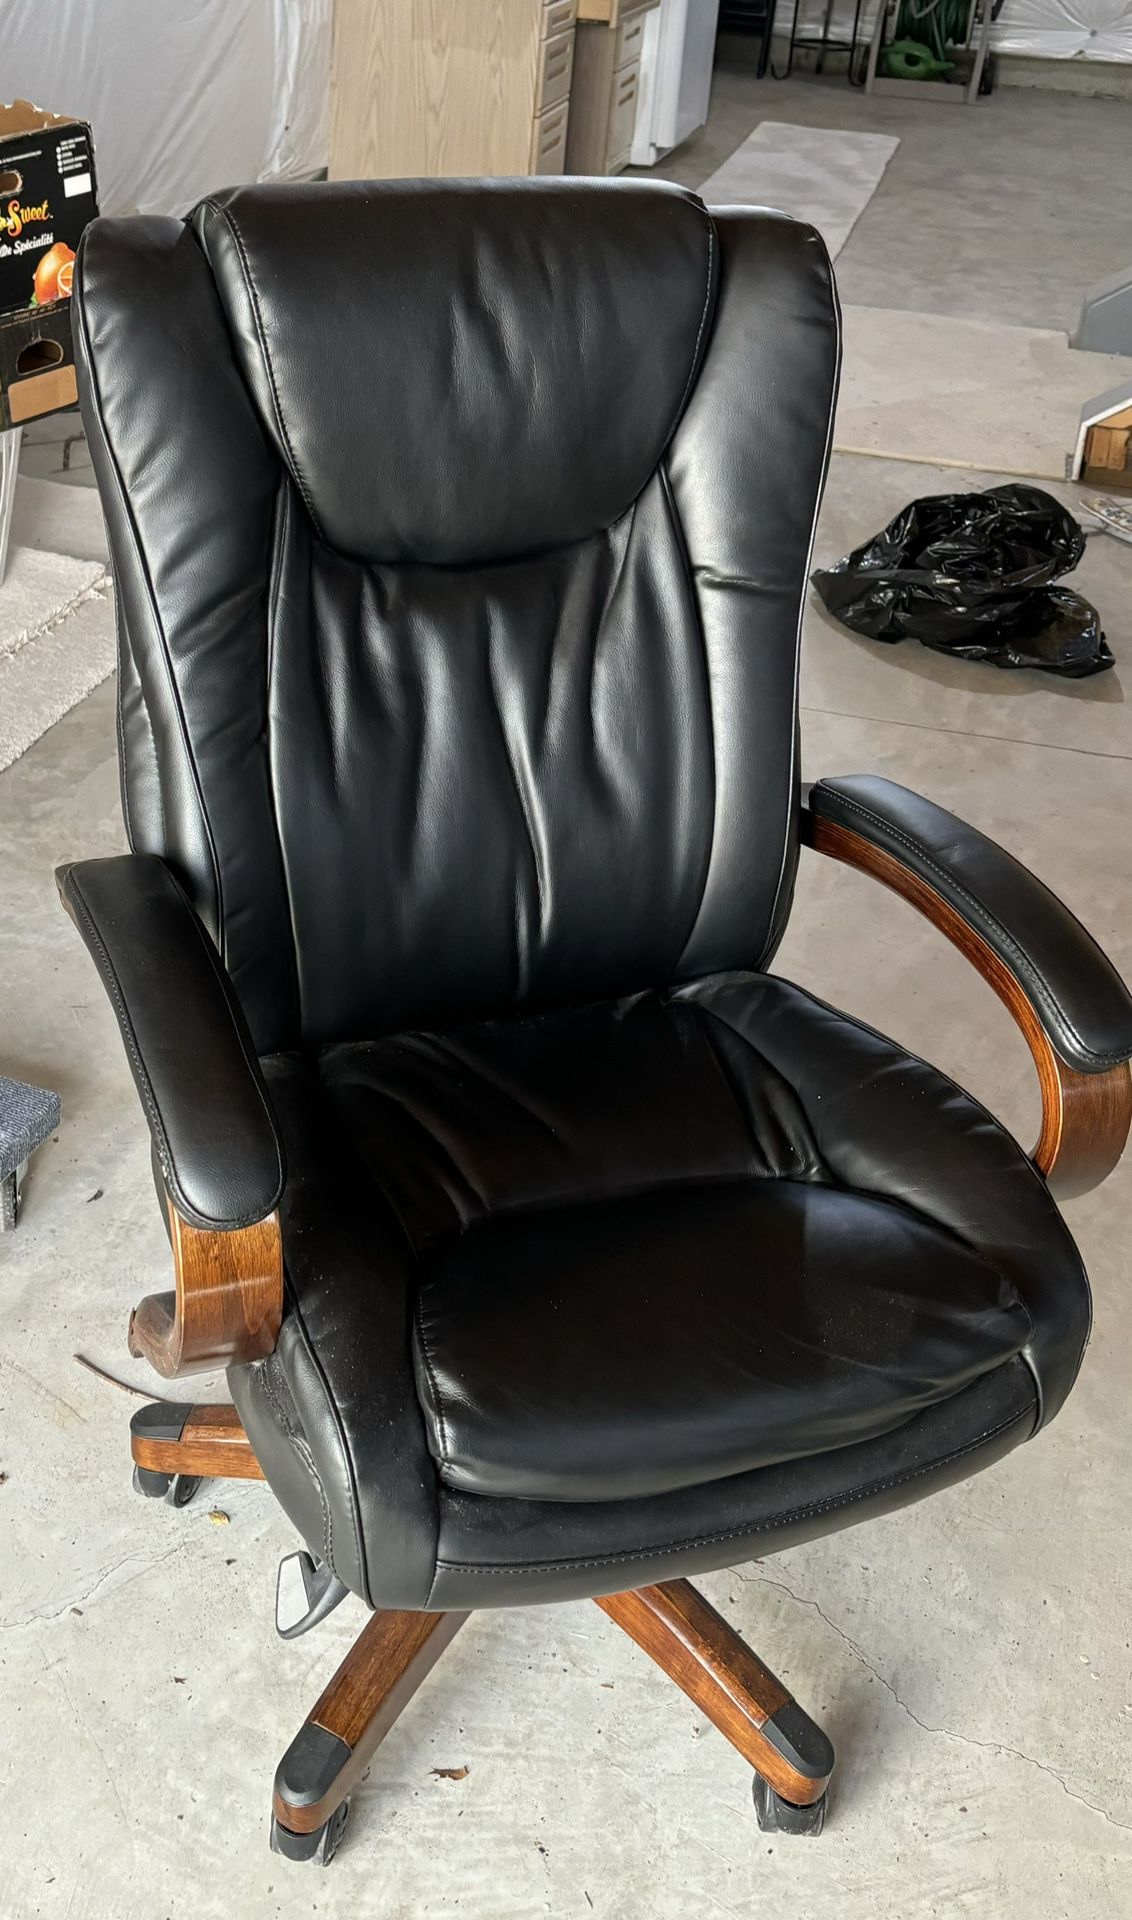 Executive La-Z-Boy Leather Desk Chair -Black